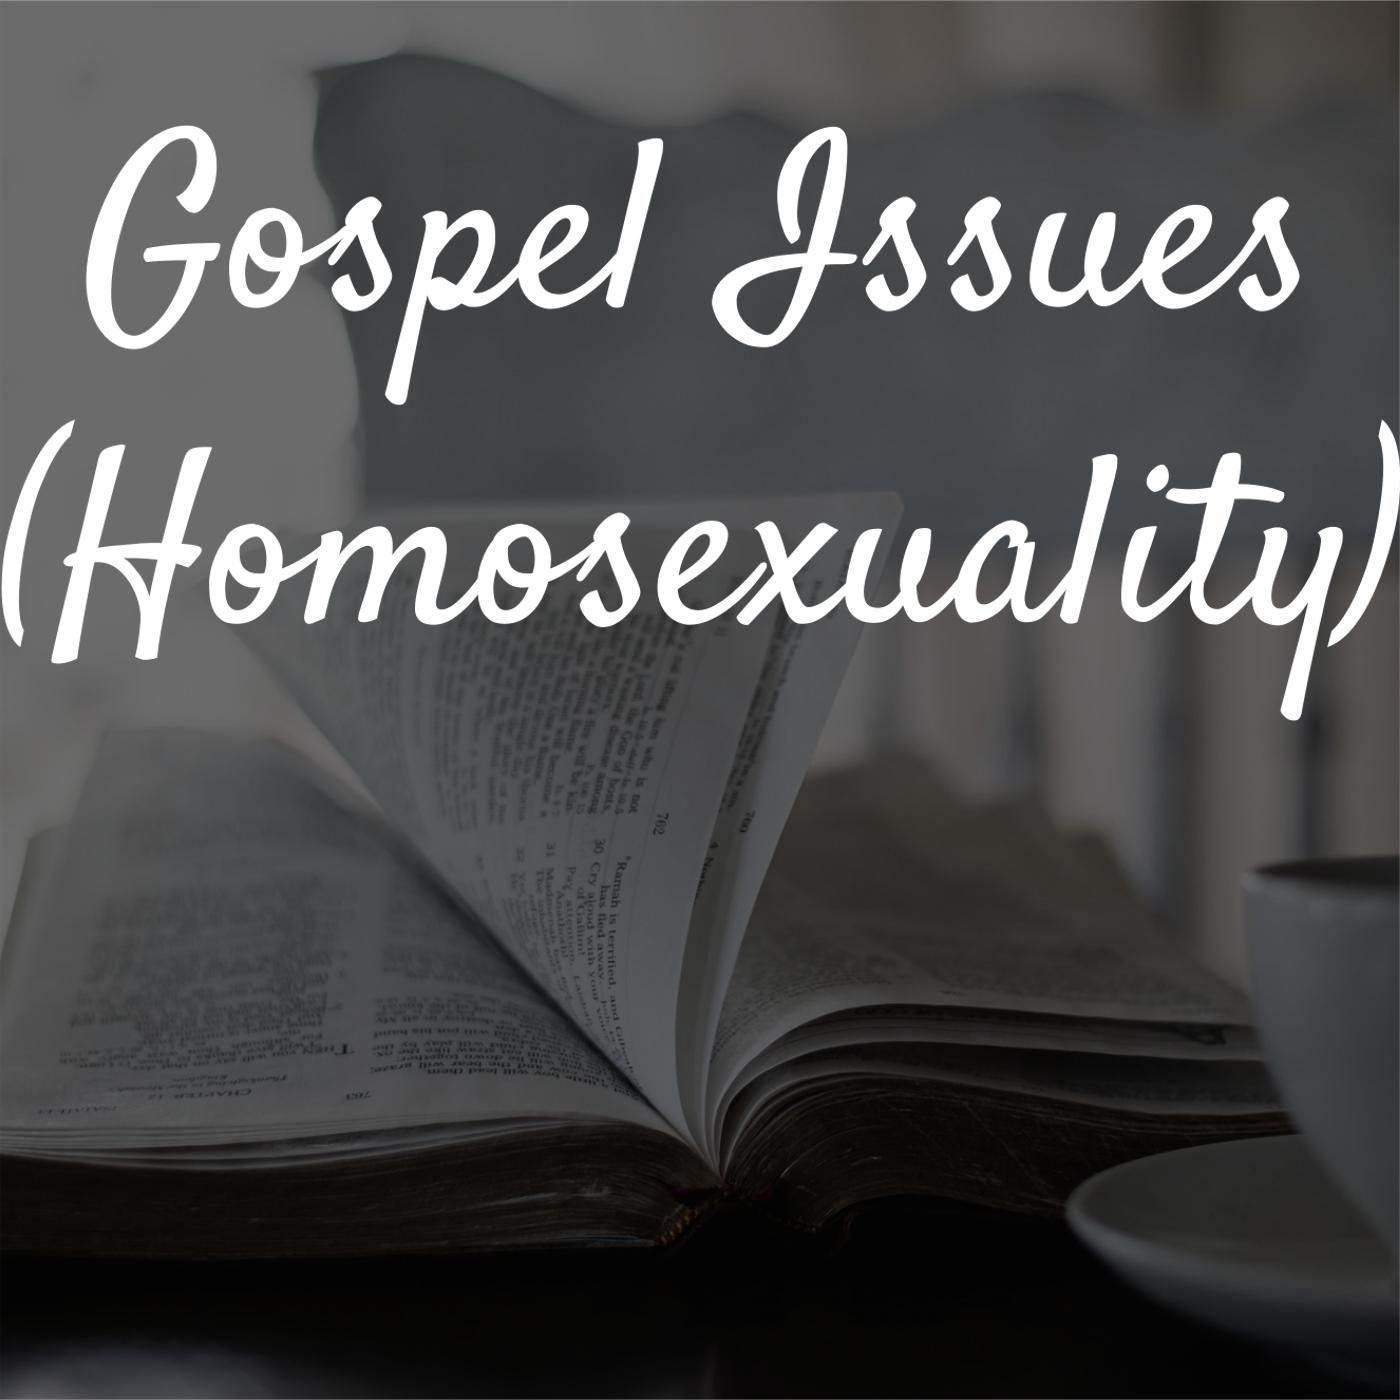 #57 Gospel Issues (Homosexuality)